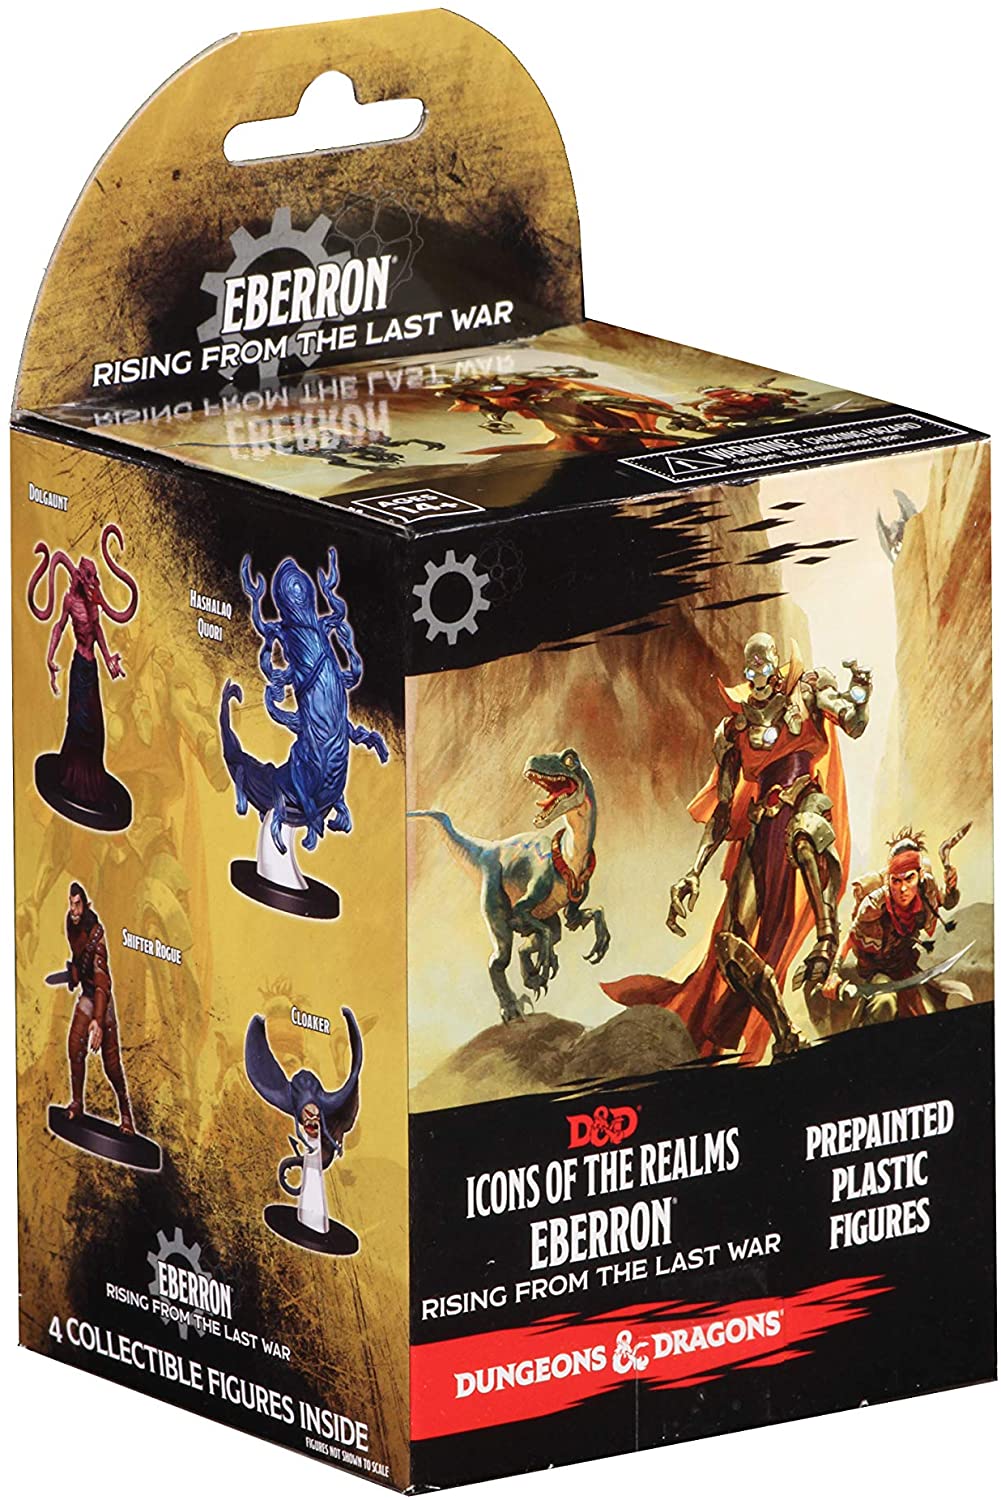 Eberron figure set